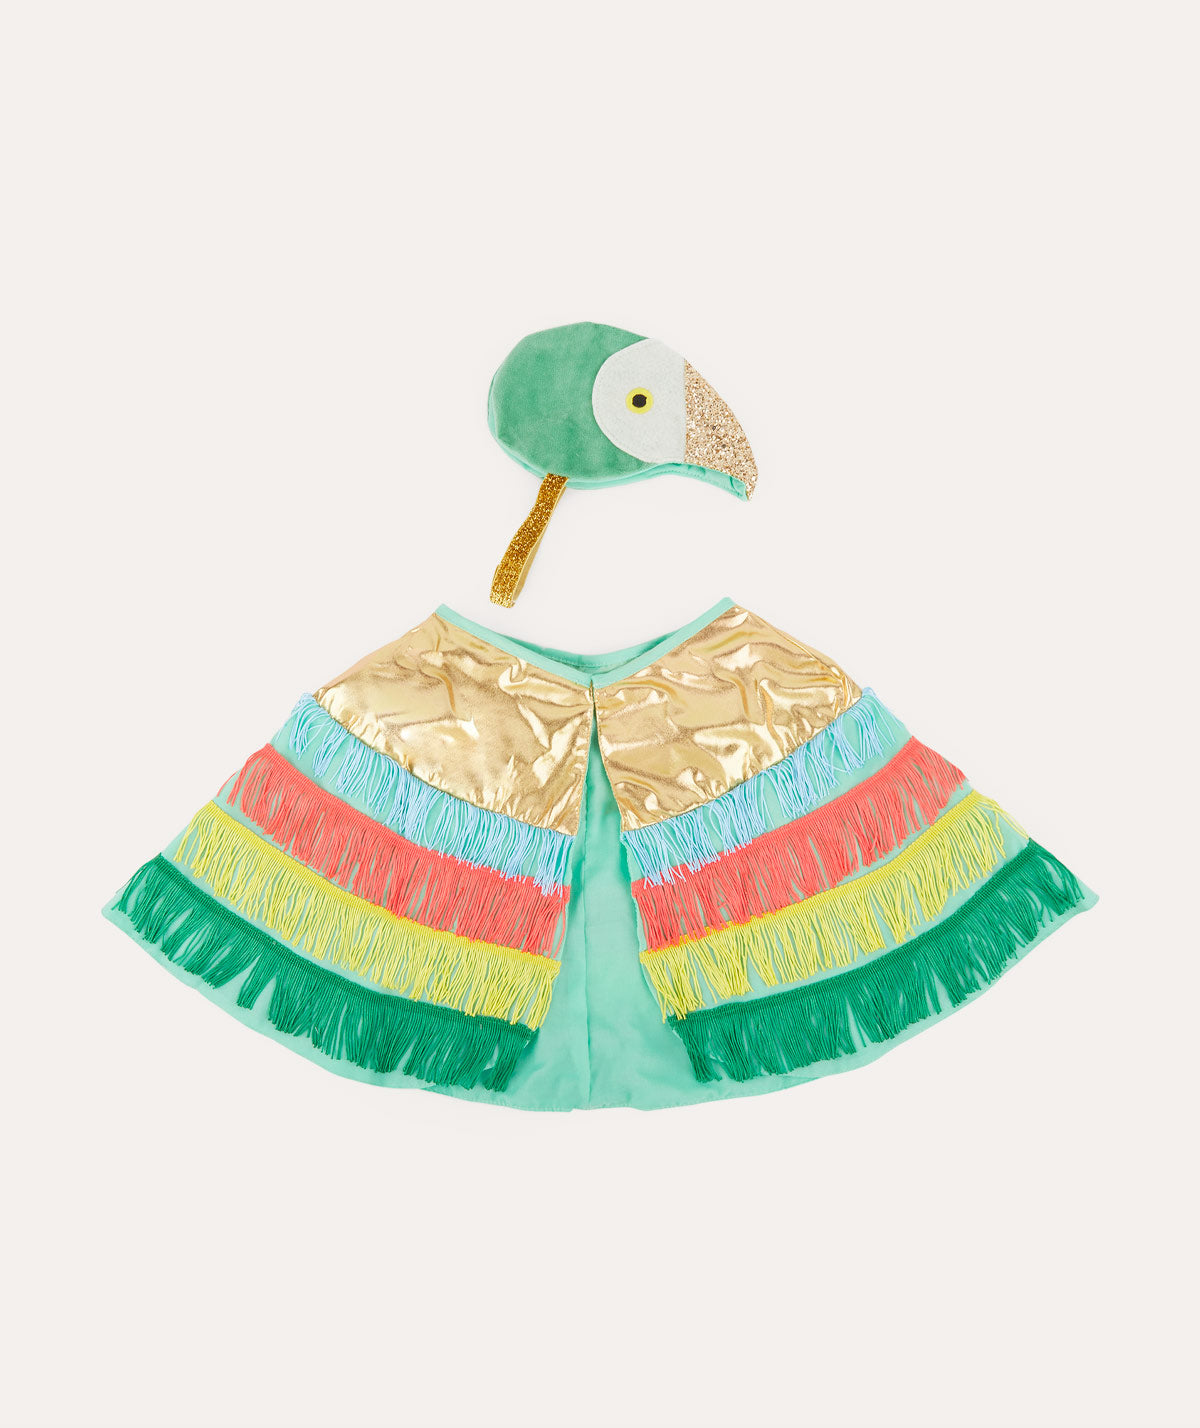 Parrot Fringed Cape Dress up: Multi